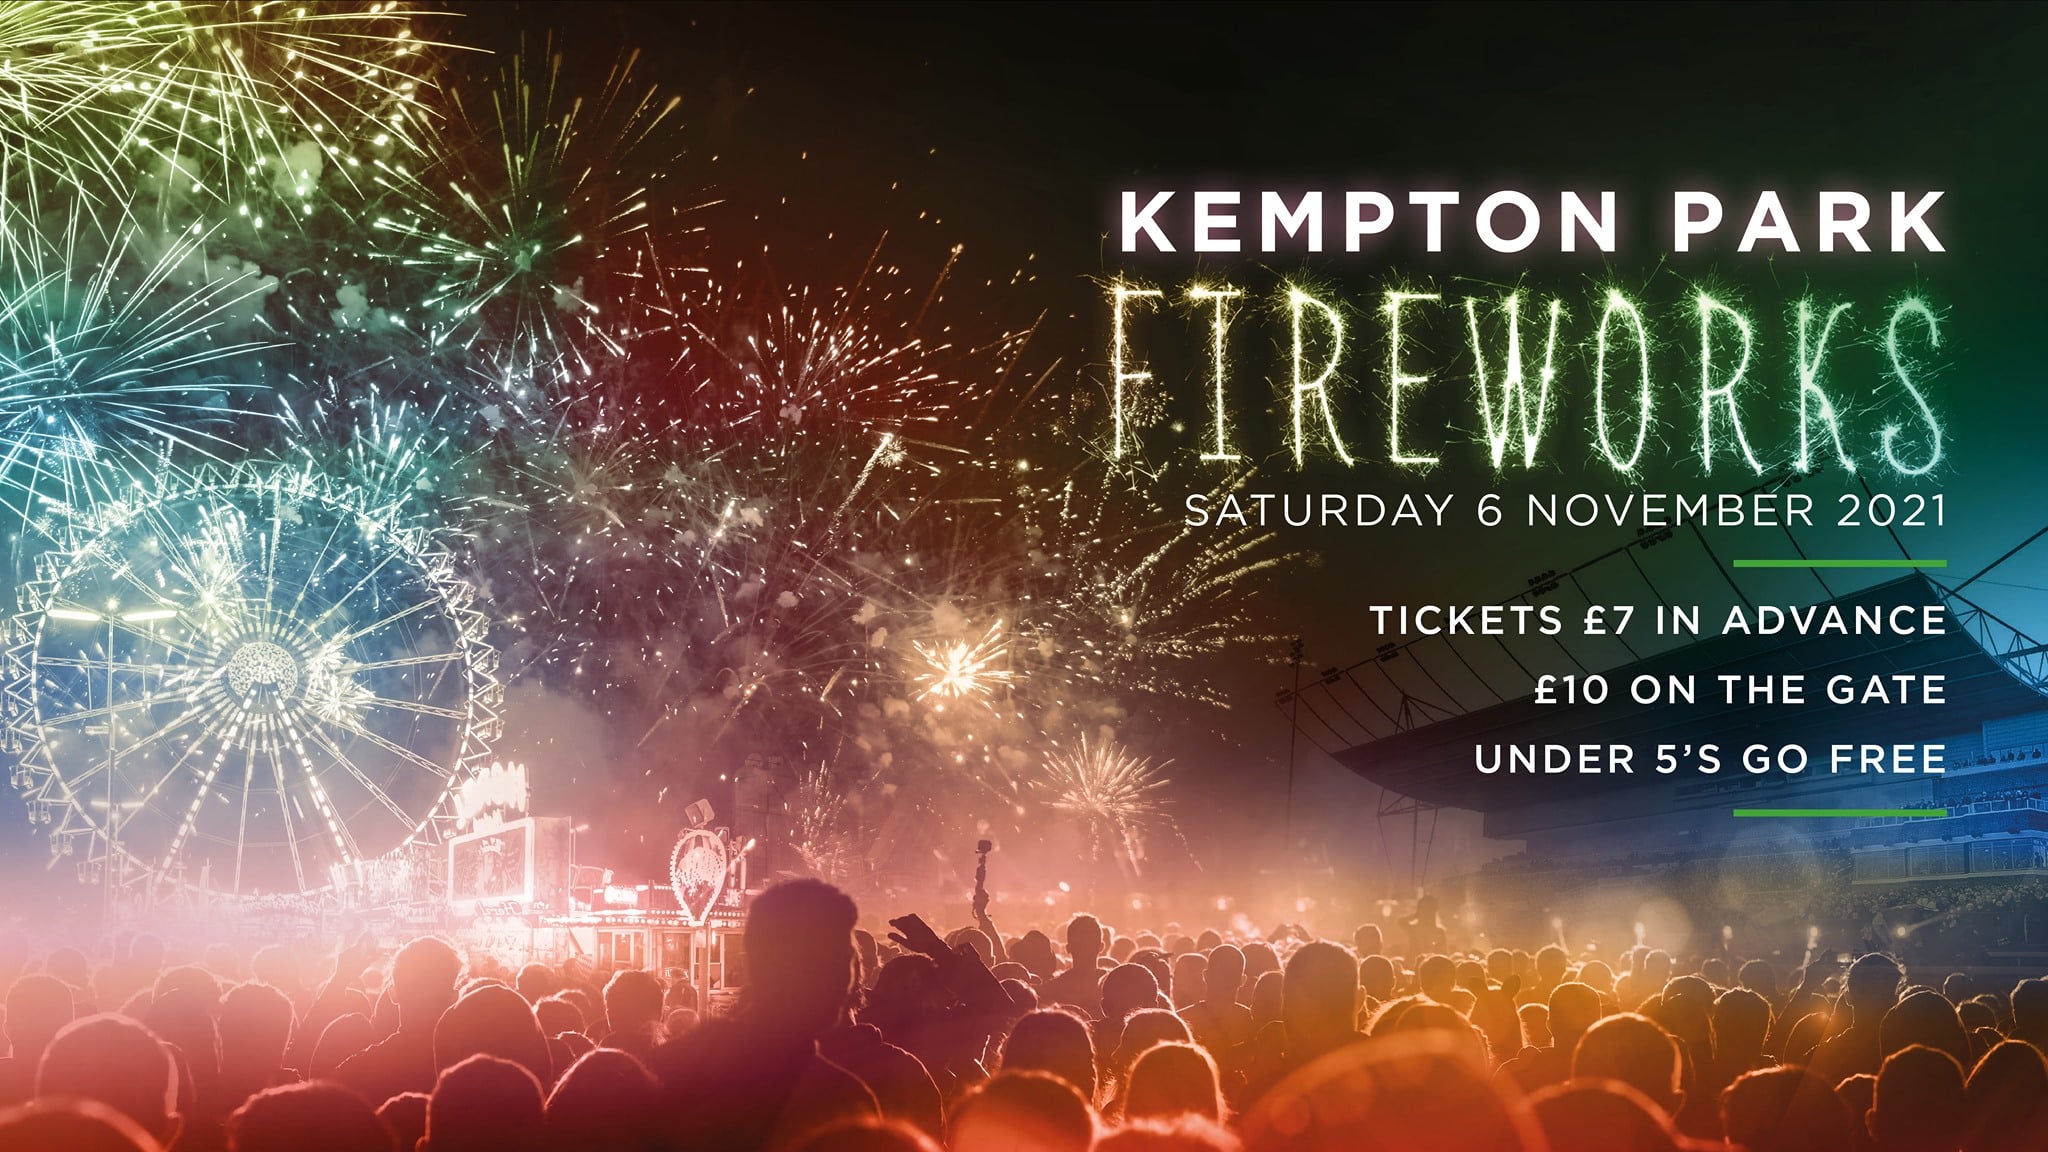 Kempton Park Fireworks - Bonfire Night in Surrey